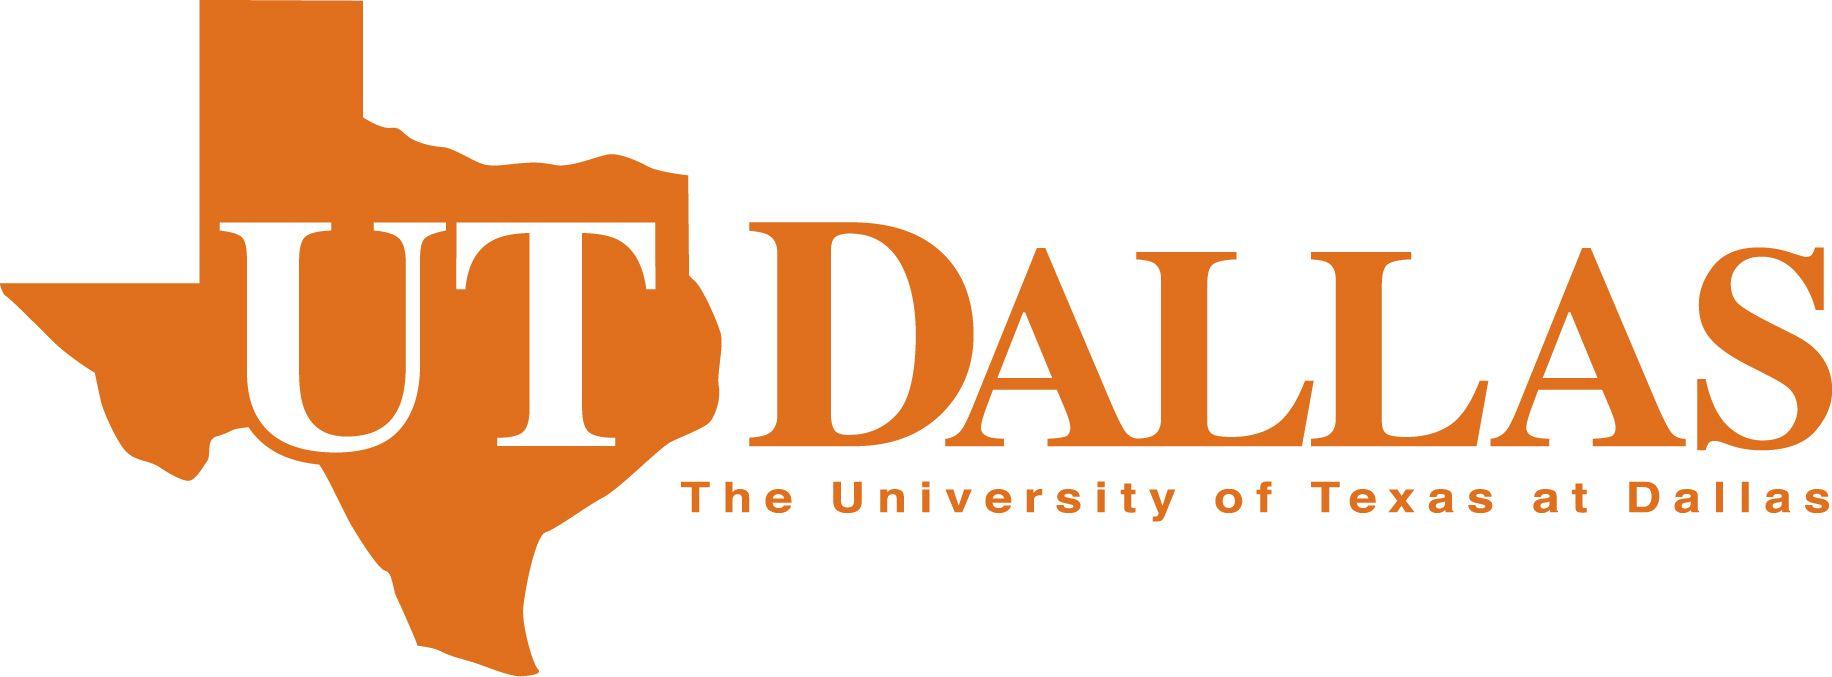 Utd Comets Logo - GET - Login - The University of Texas at Dallas